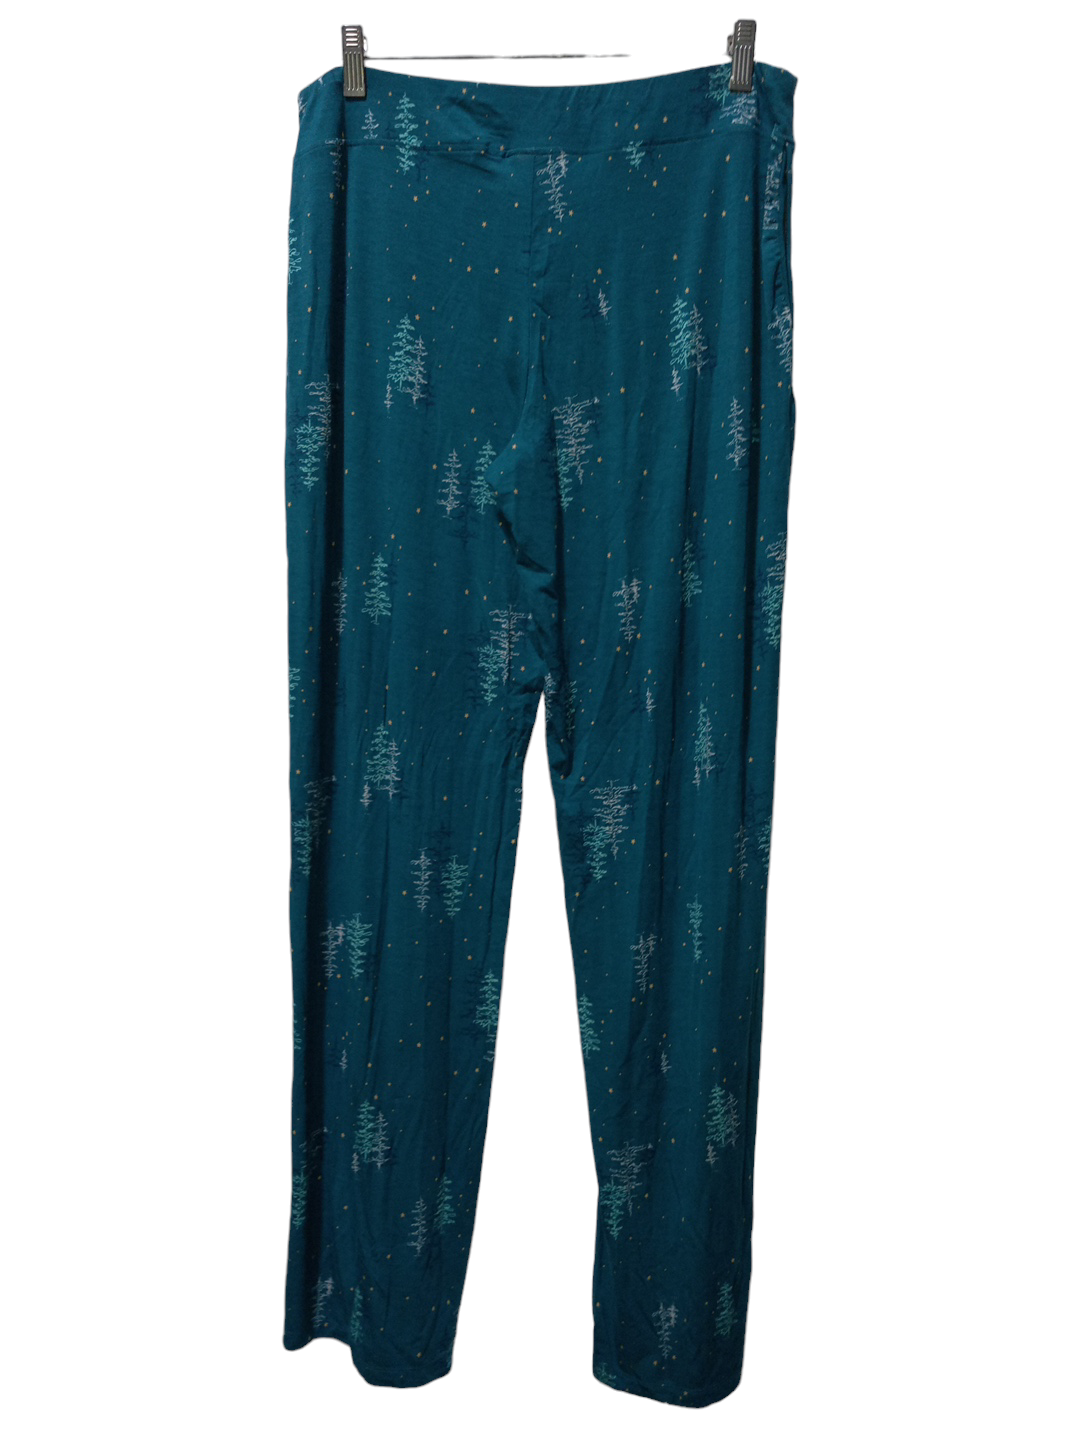 Pajamas 2pc By Soma  Size: L